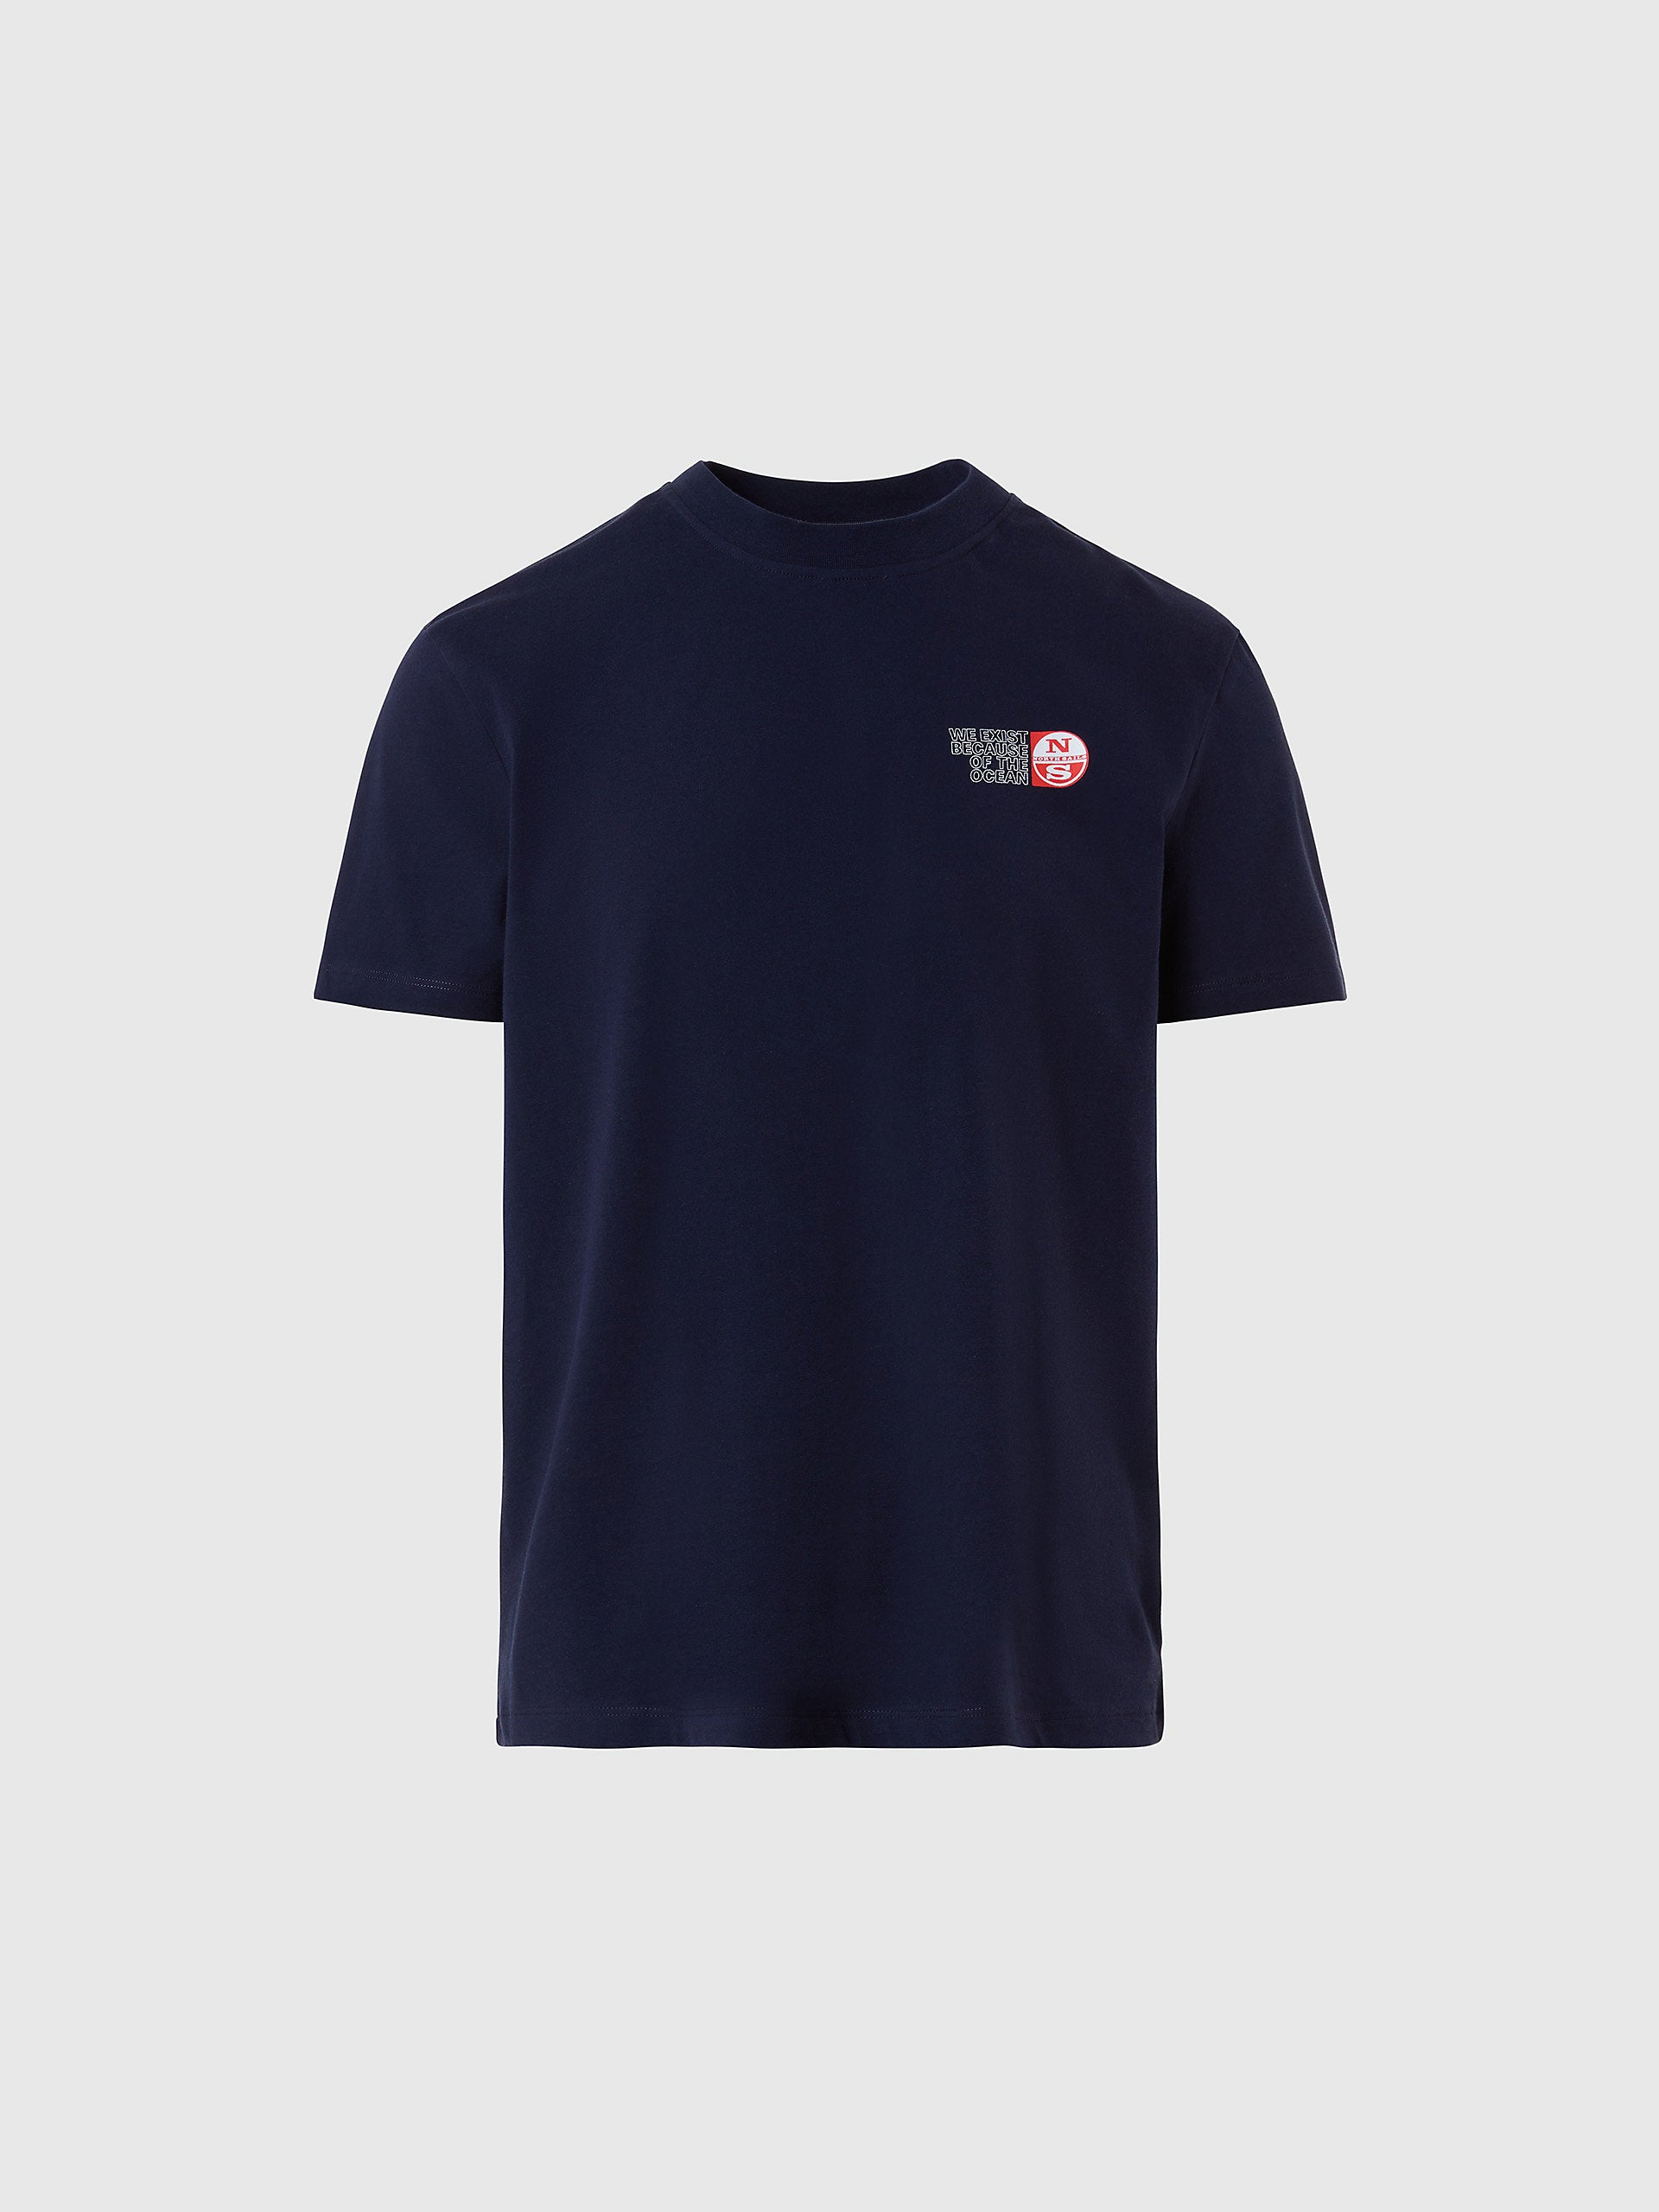 North Sails - T-shirt with chest printNorth SailsNavy blueXXL